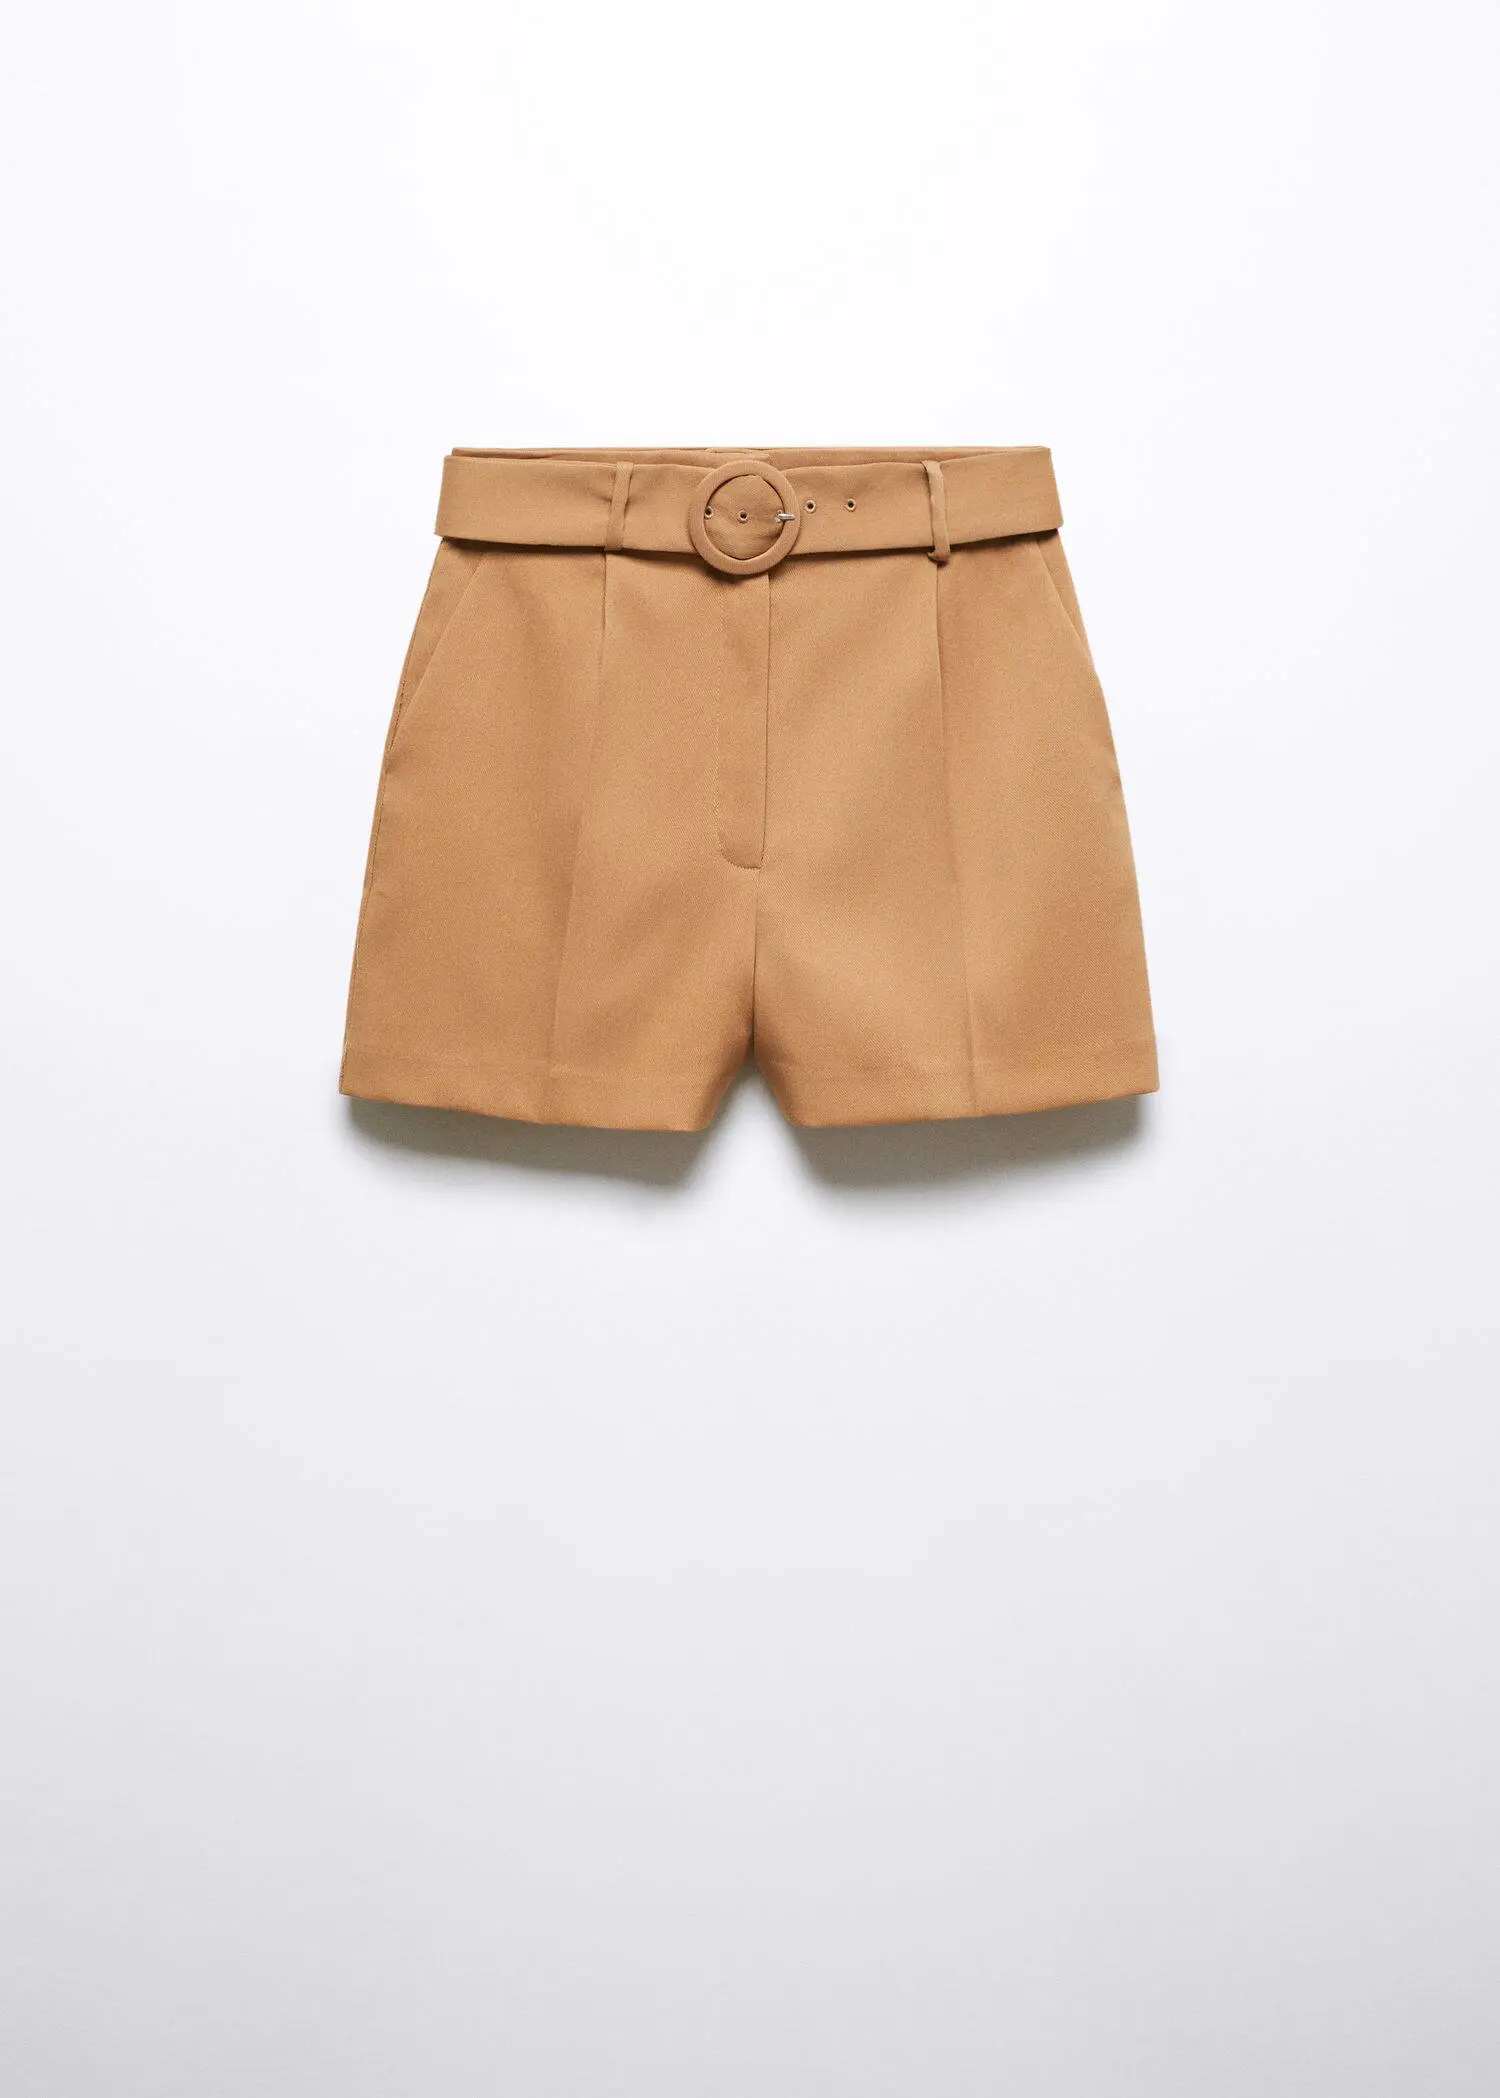 Mango Paperbag shorts with belt. 1